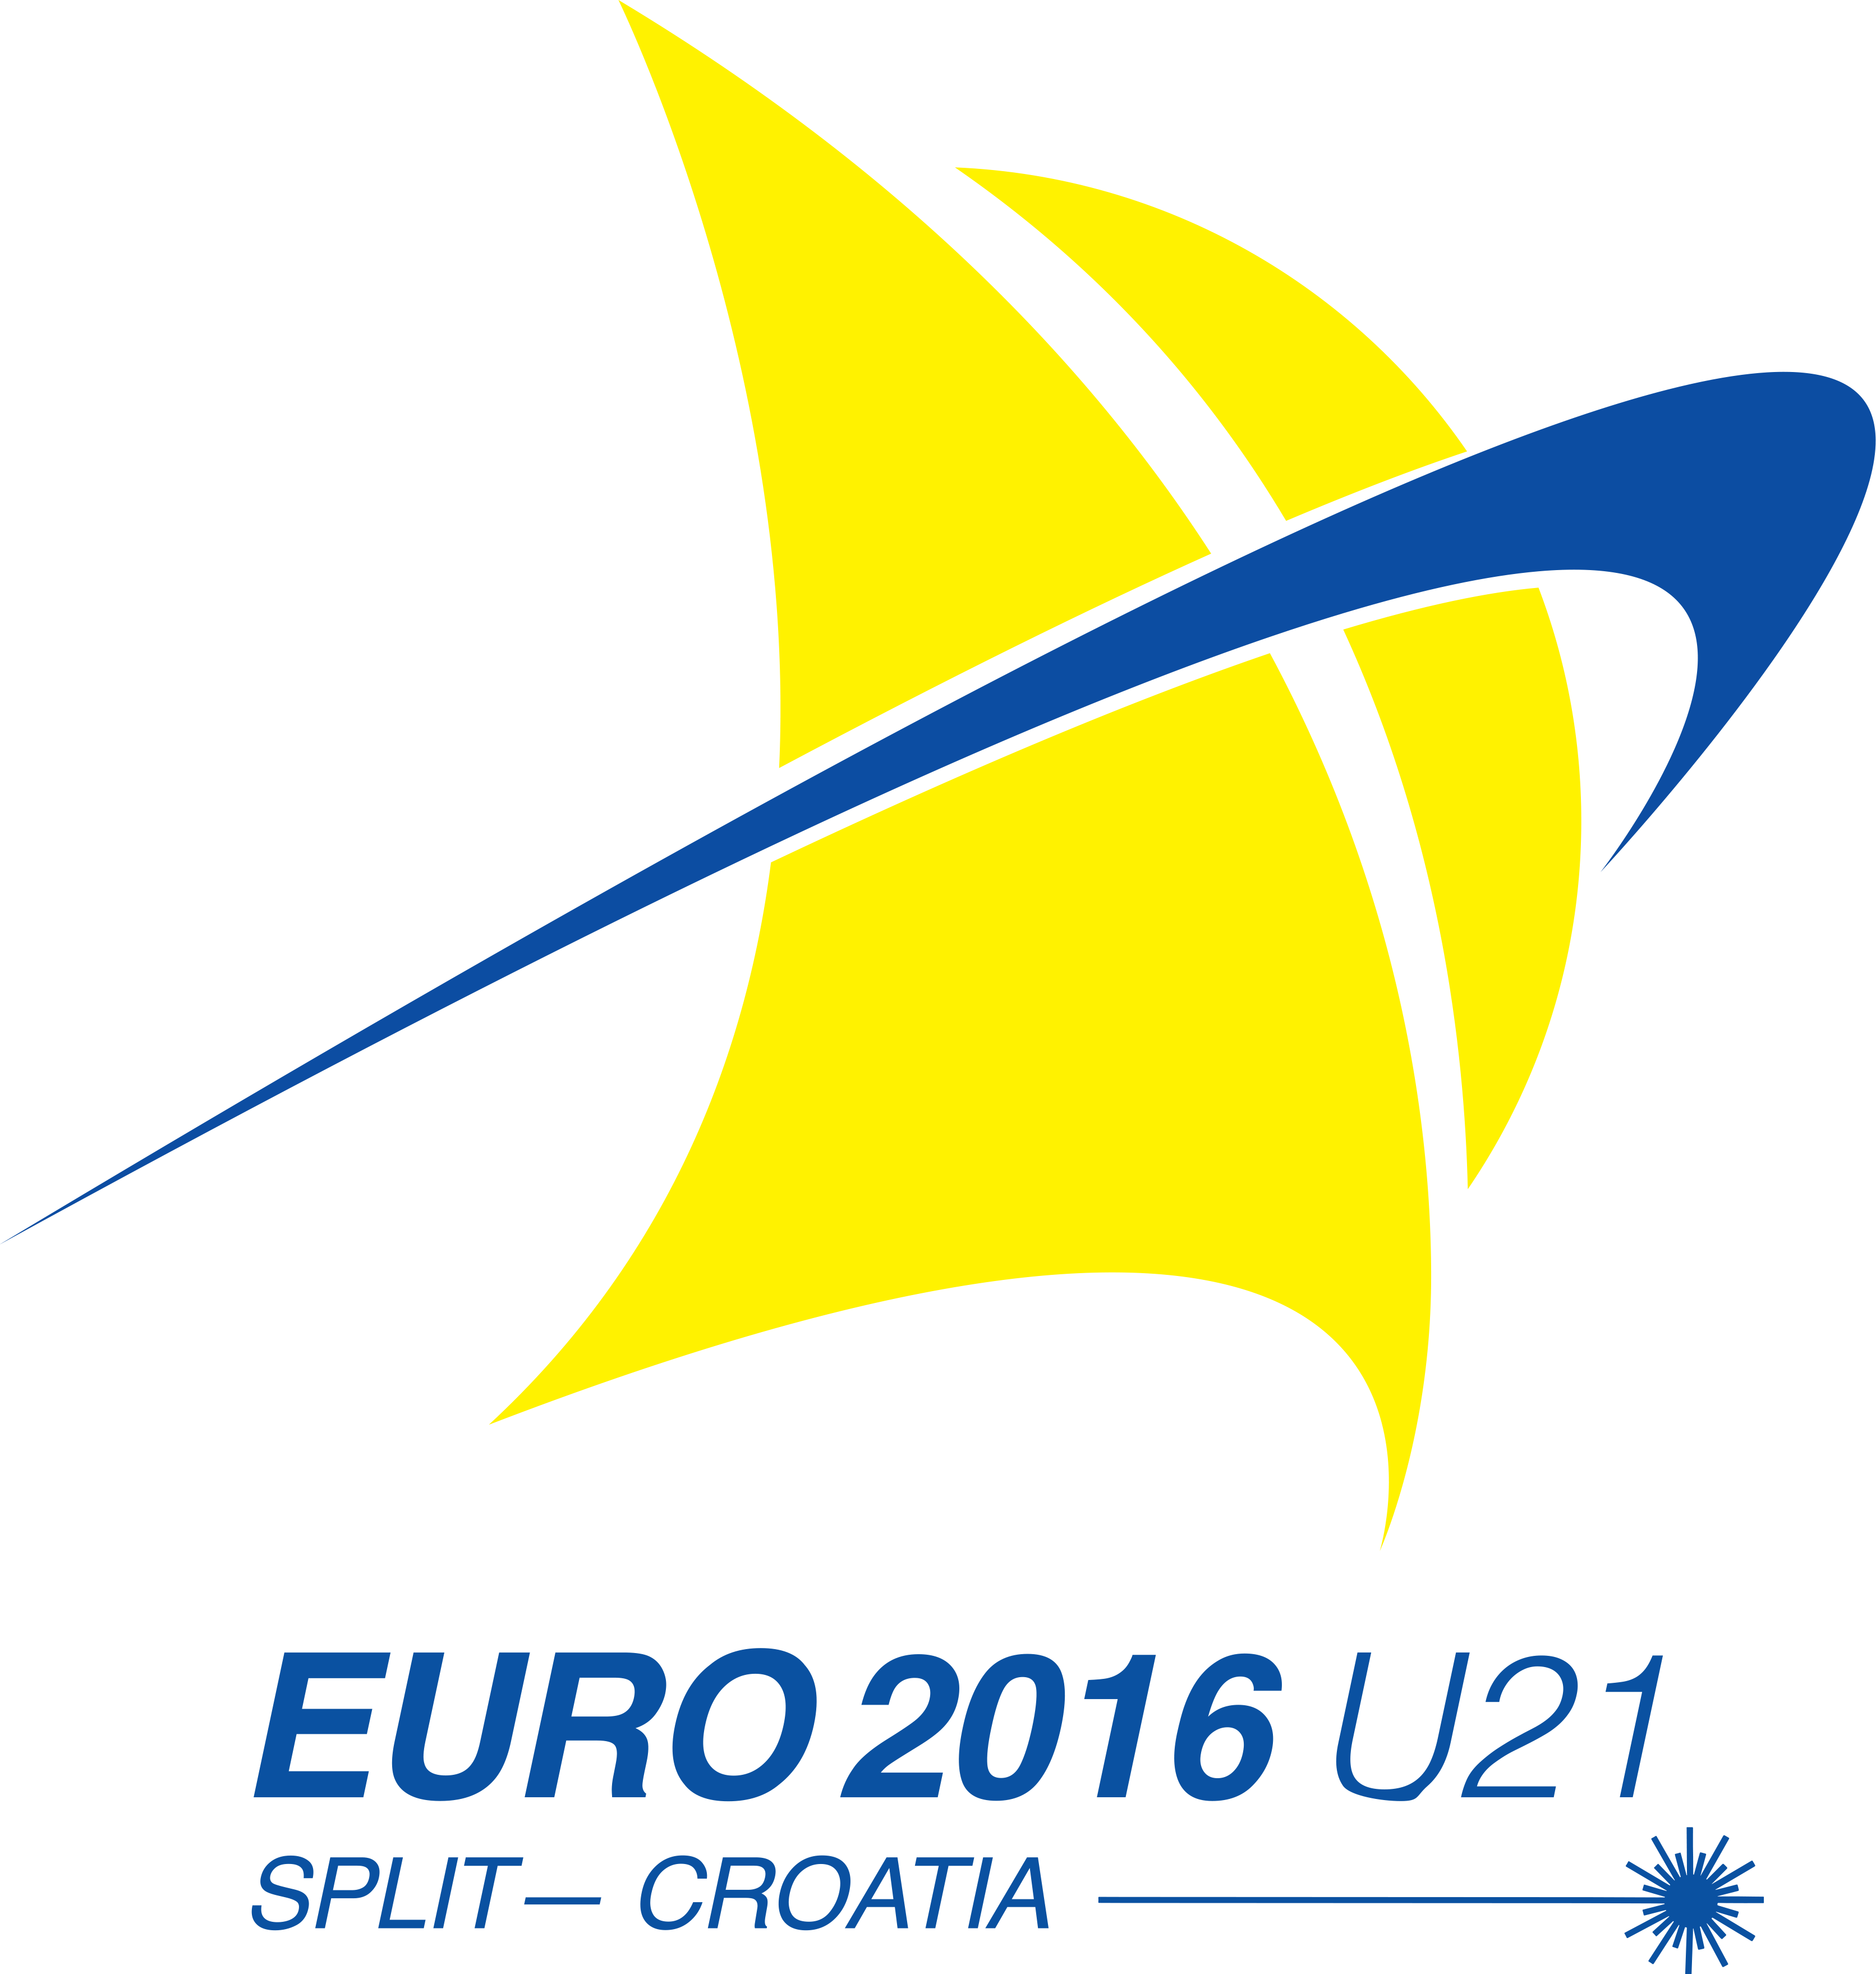 European Laser under 21 Championships & Trophy 2016